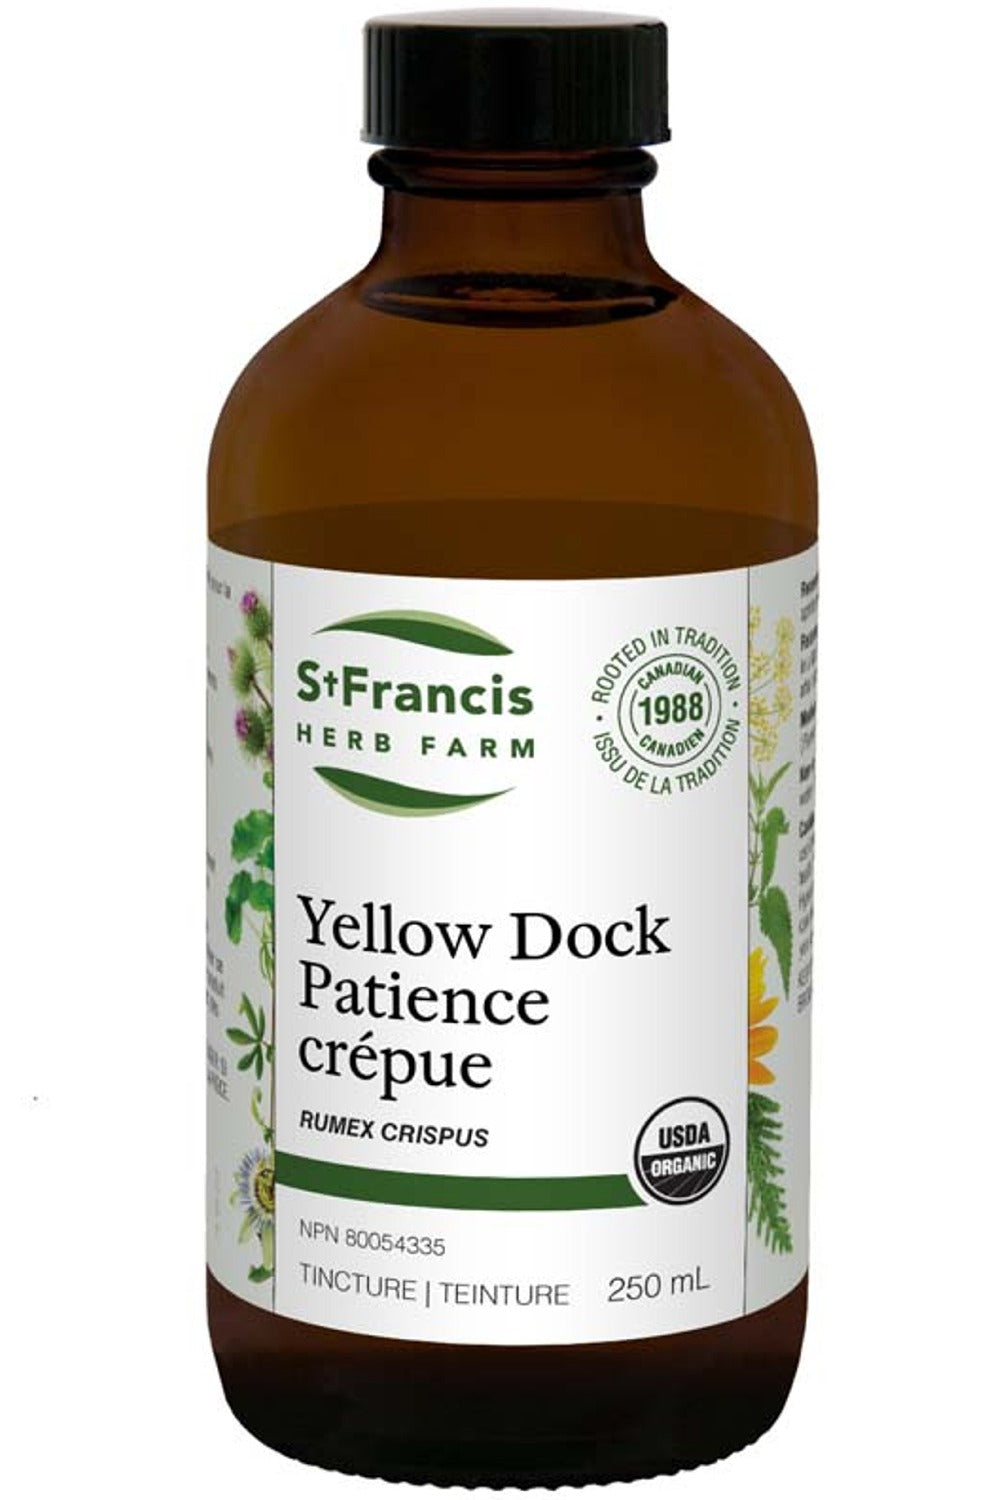 ST FRANCIS HERB FARM Yellow Dock (250 ml)